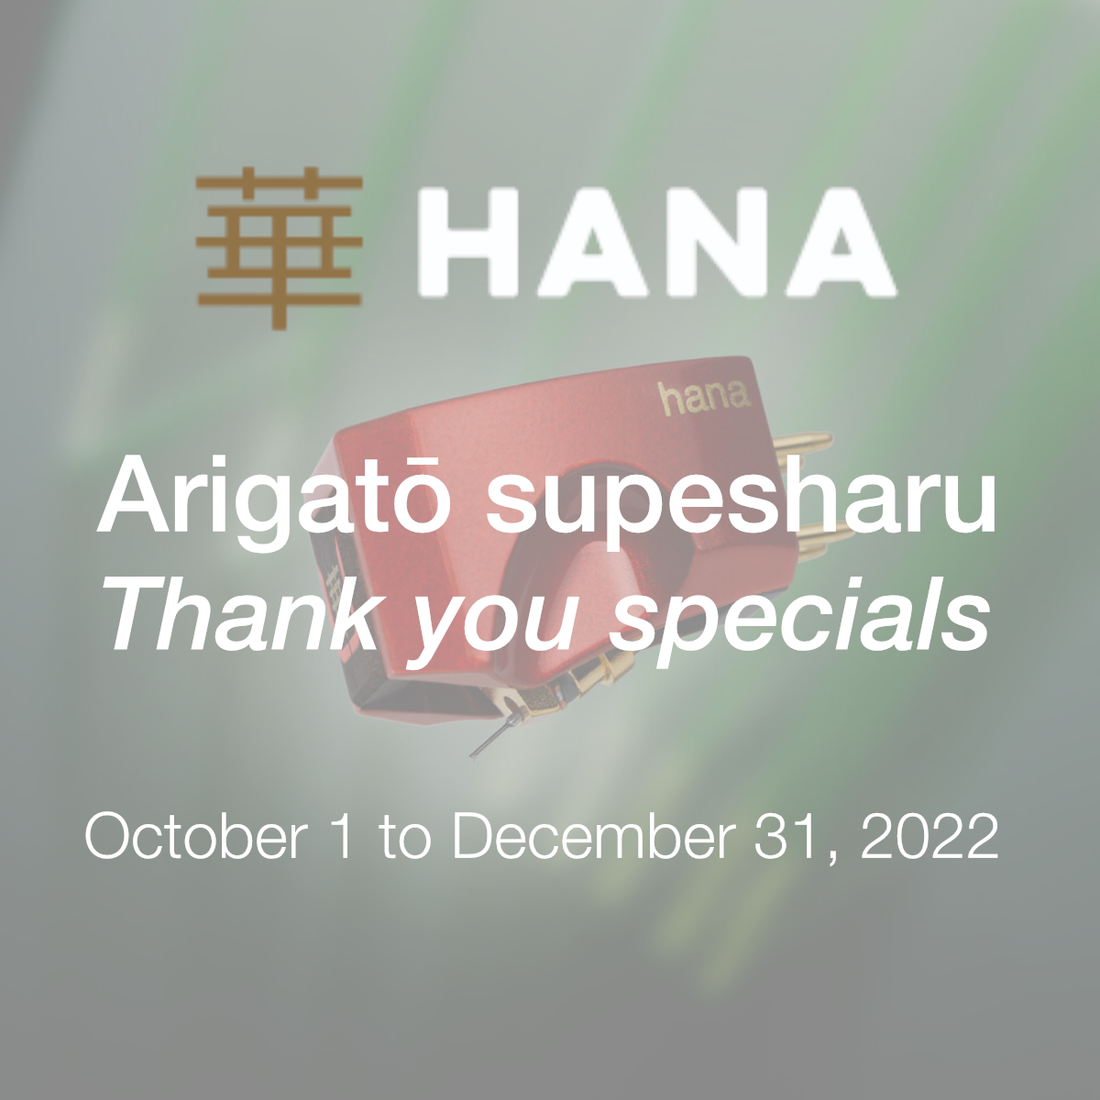 Hana specials 2022